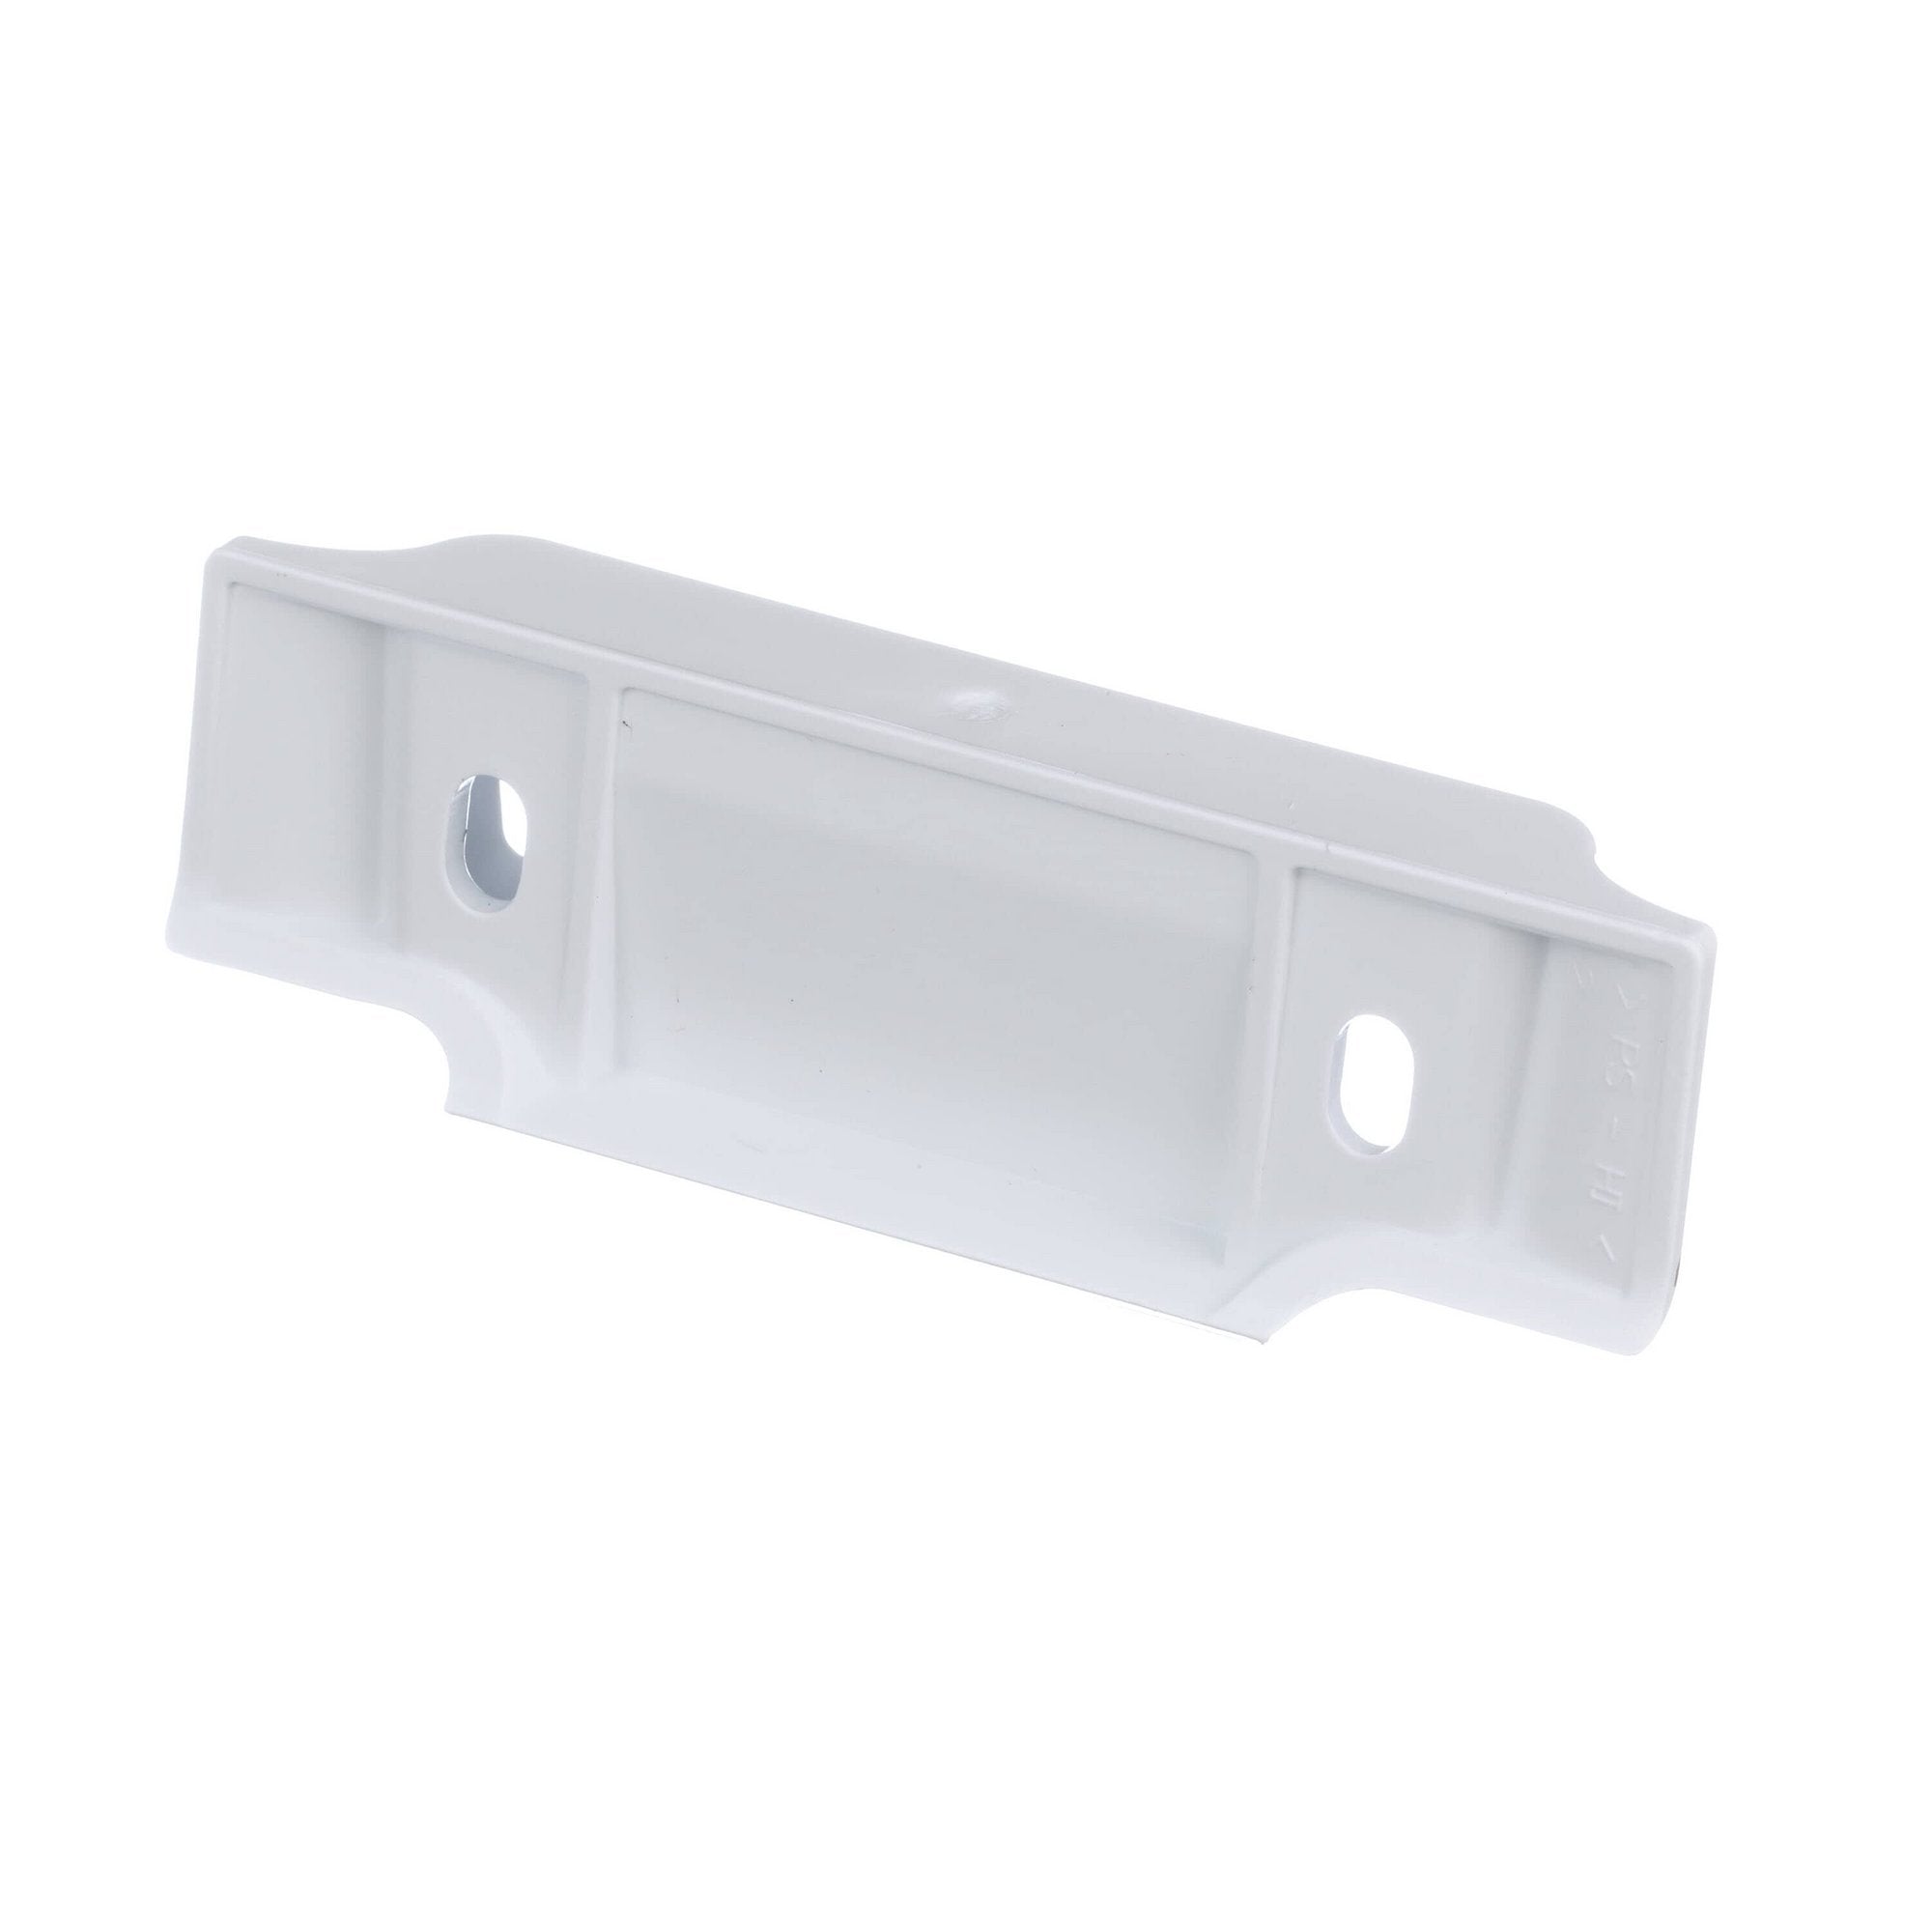 WP67003405 - Whirlpool Refrigerator Door Guide New